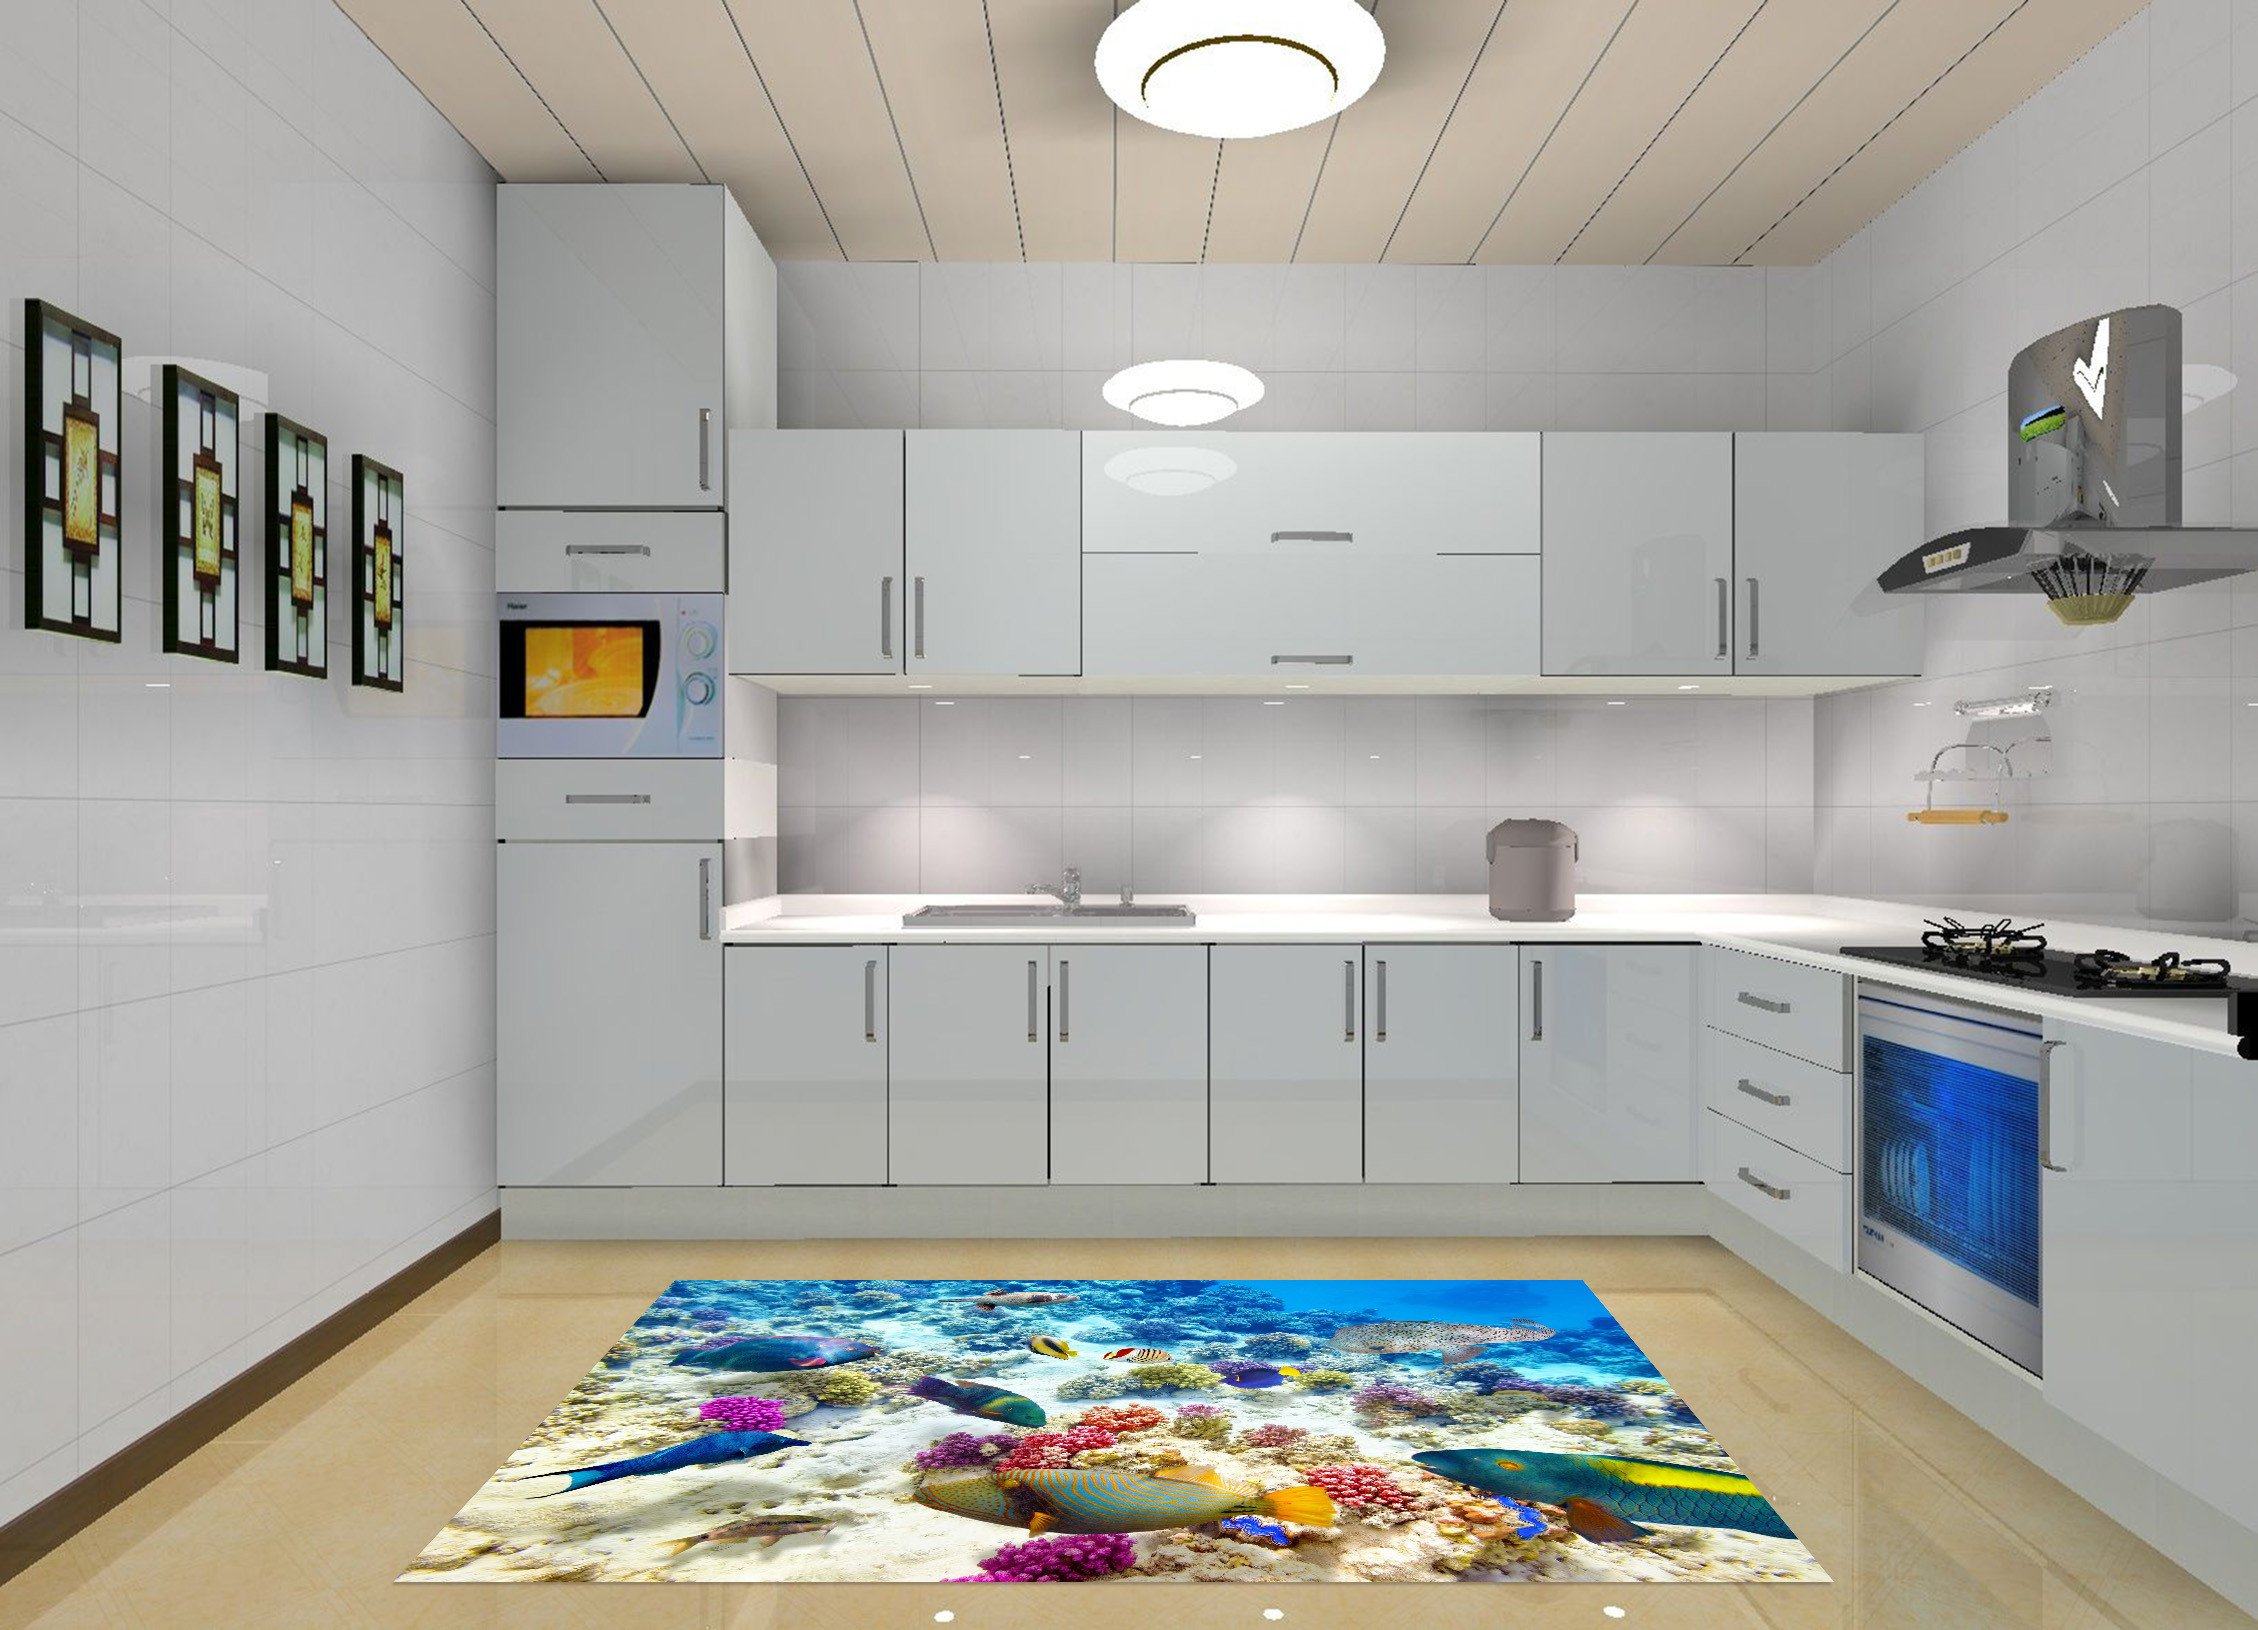 3D Seabed Scenery Kitchen Mat Floor Mural Wallpaper AJ Wallpaper 